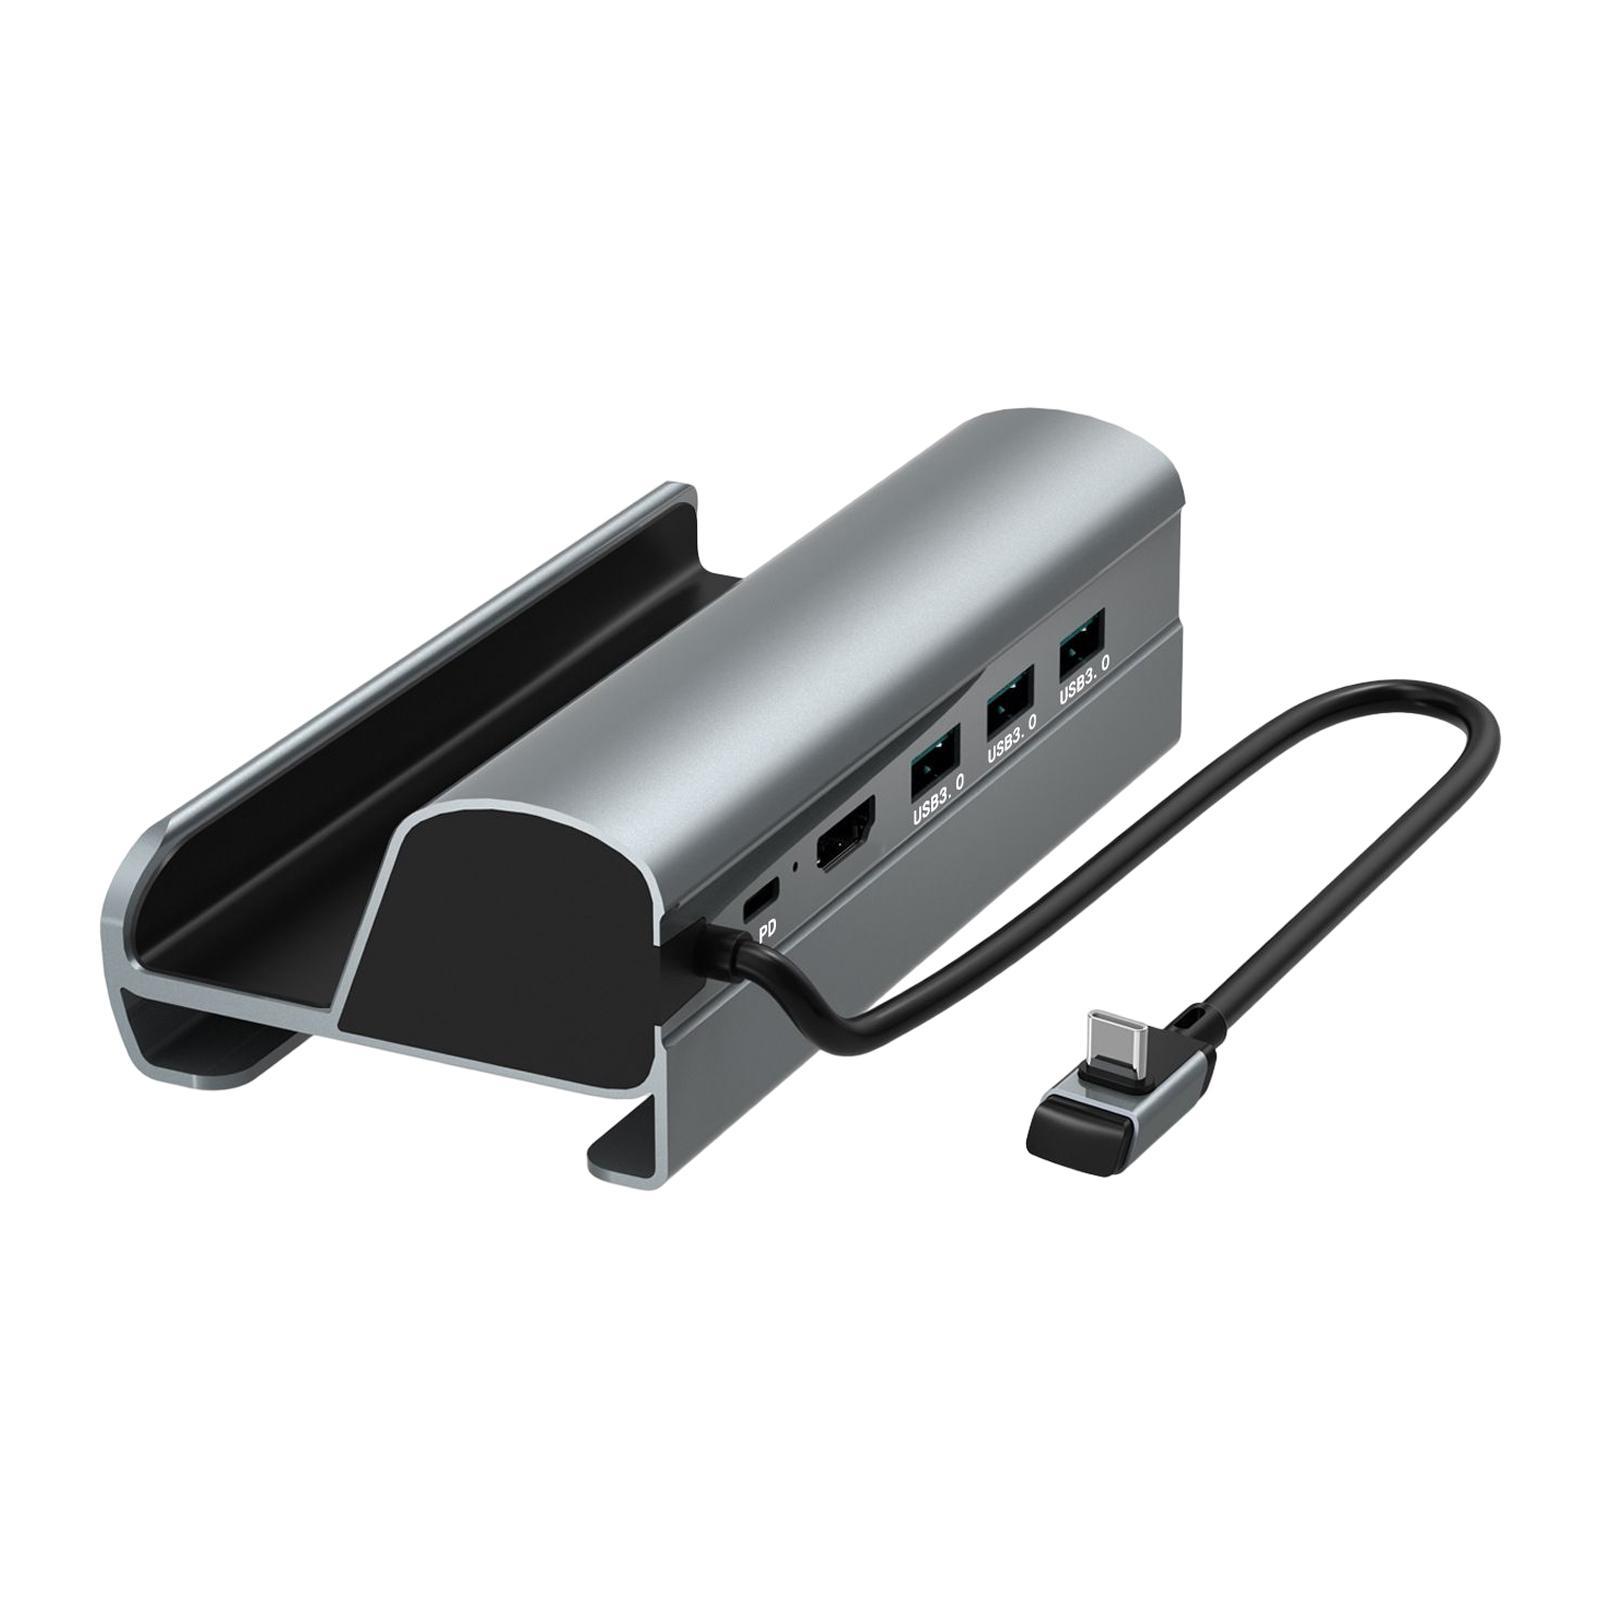 6 in 1 Docking Station Portable Multifunctional USB C Hub for Phone Keyboard